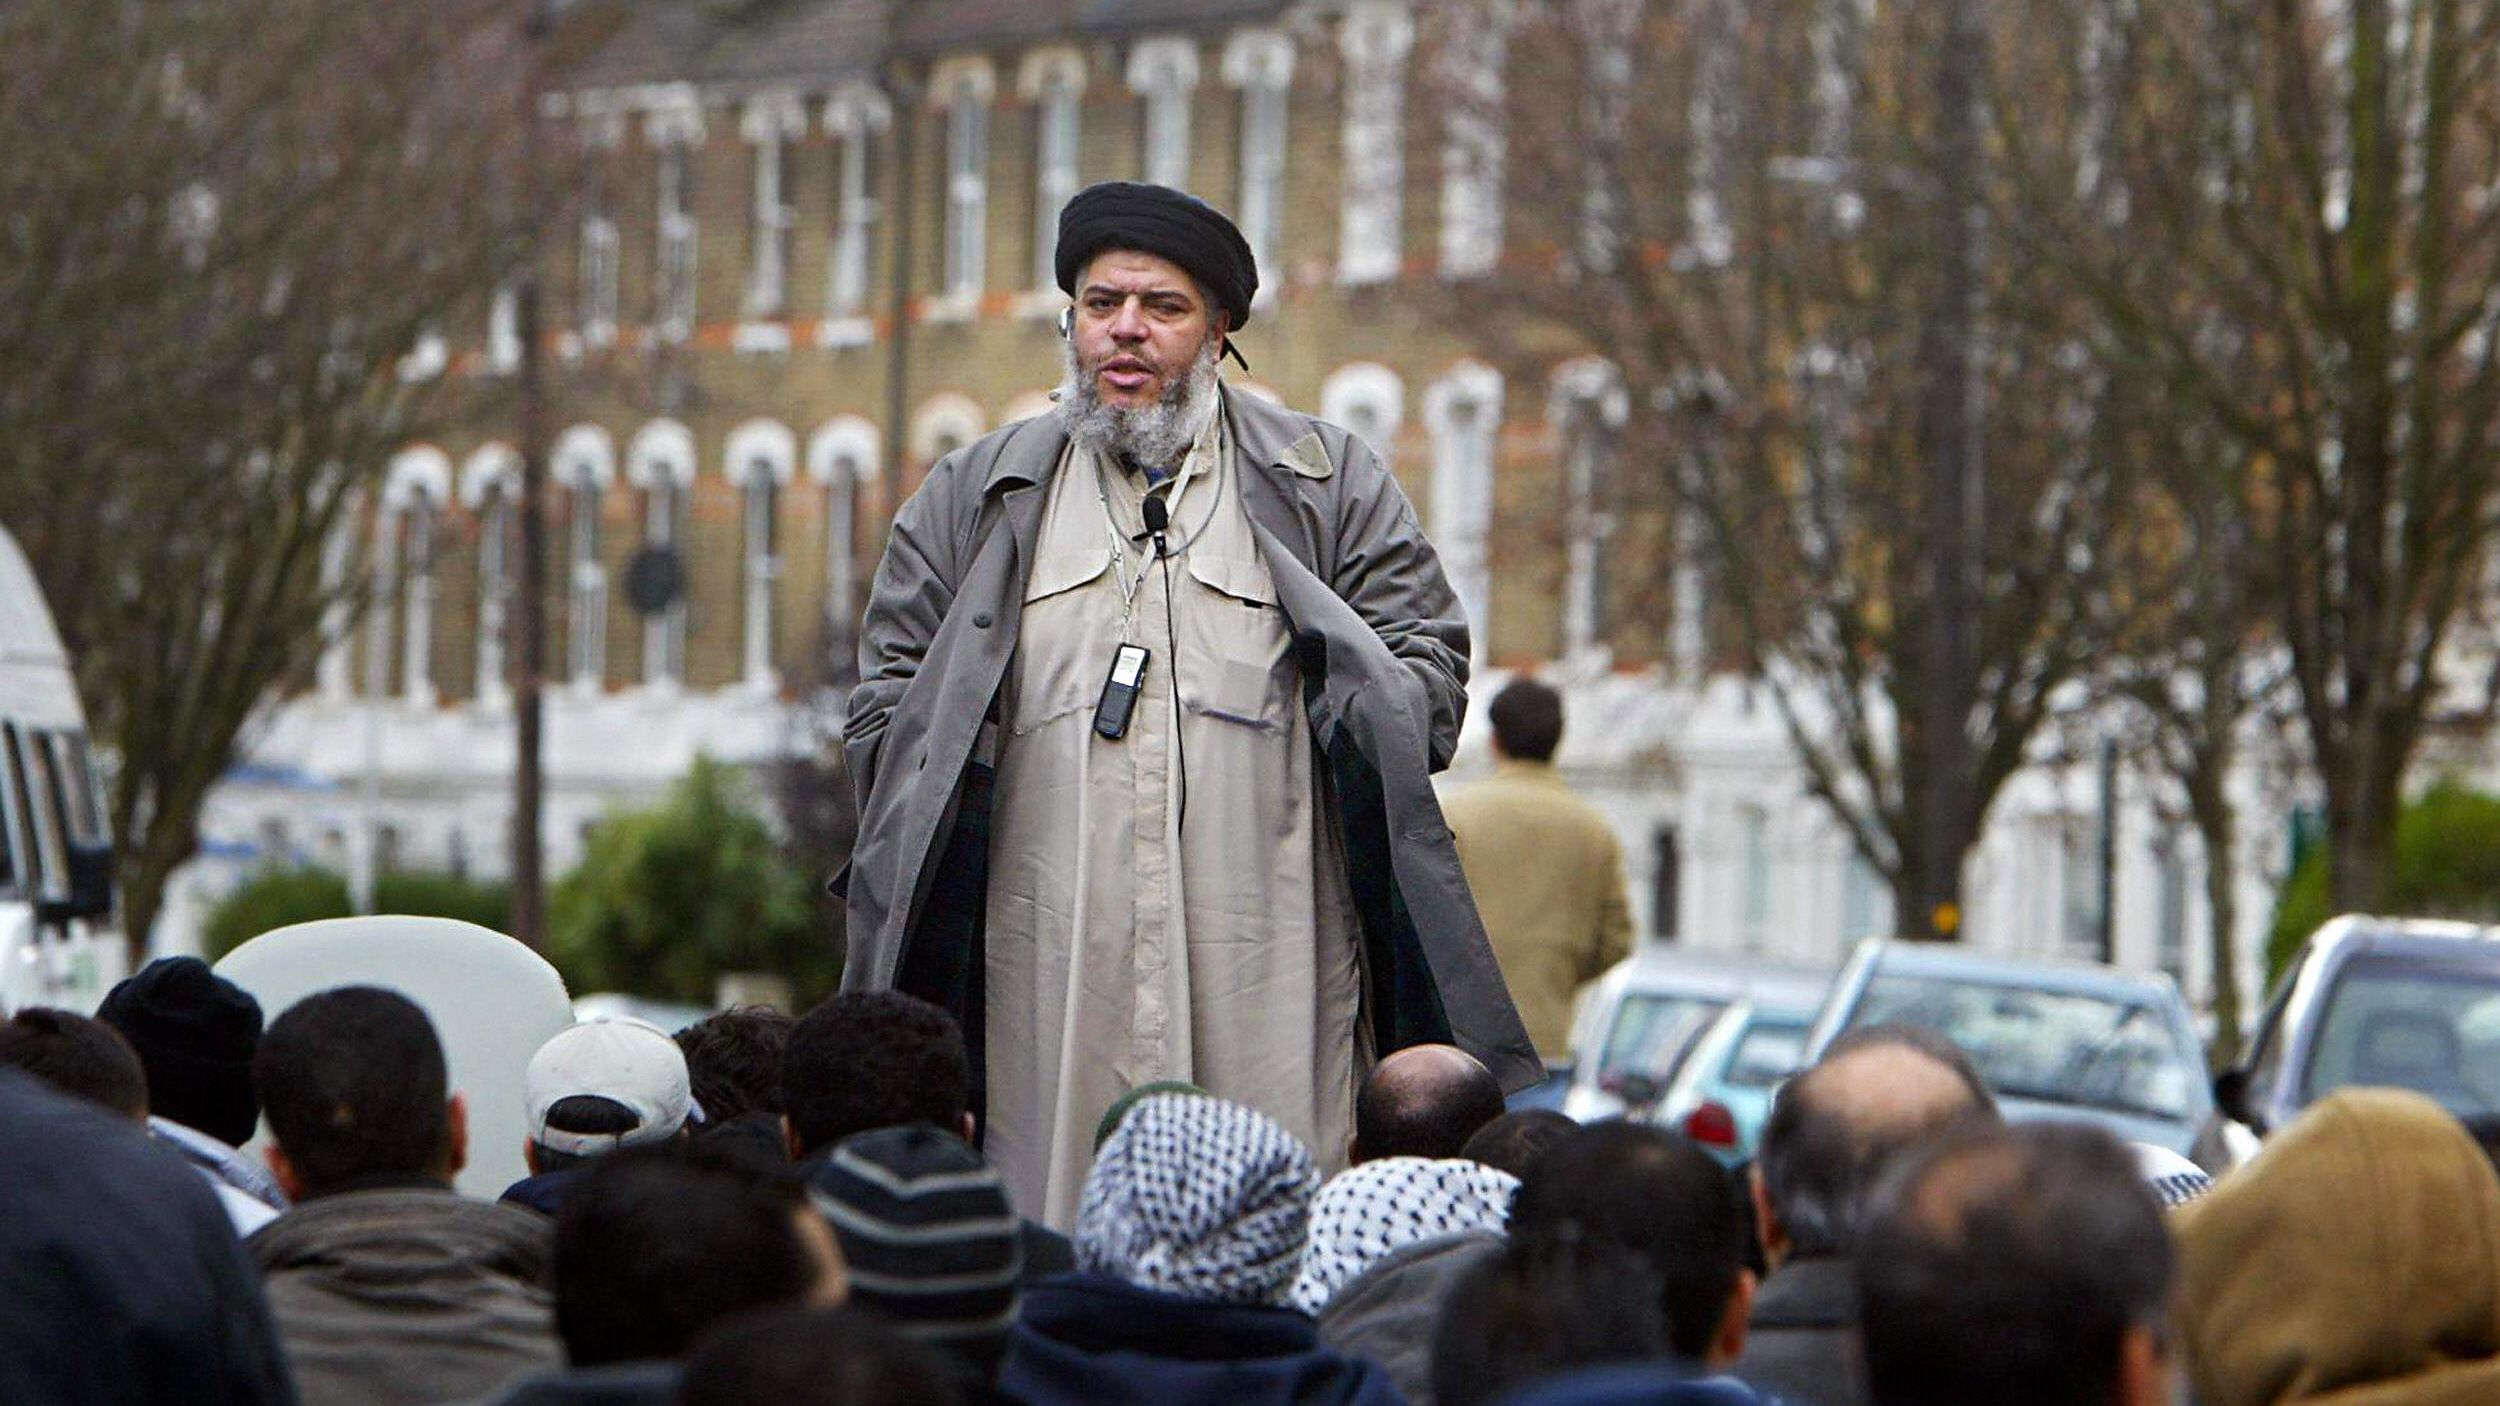 Abu Hamza al-Masri addresses followers near Finsbury Park mosque in London in 2004.